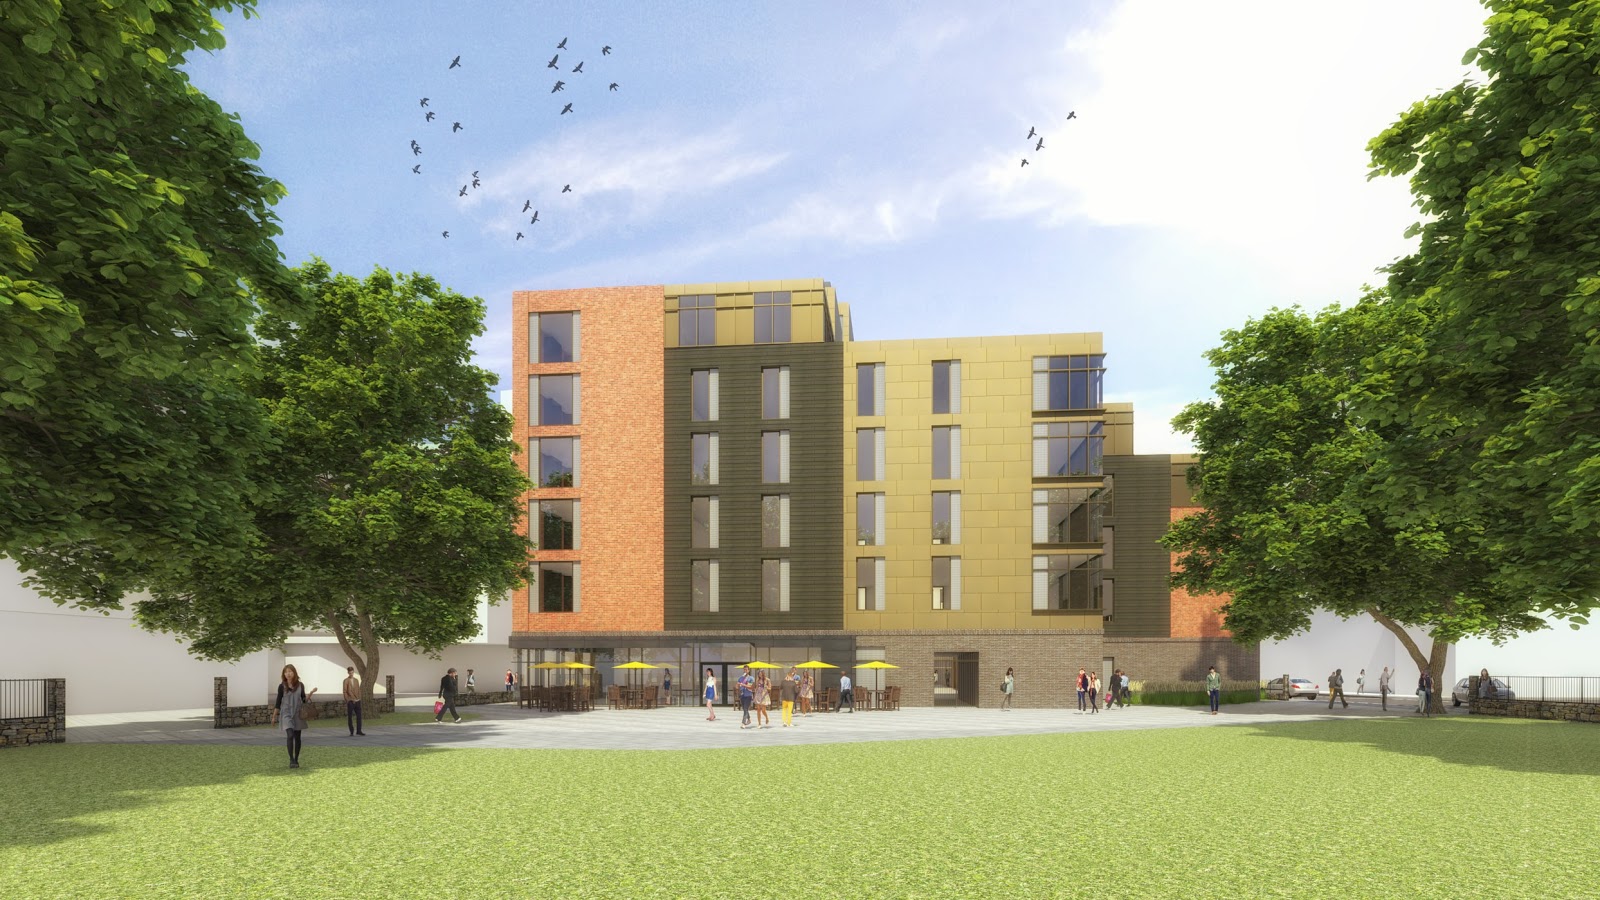 Crosslane's Cardiff Student Accommodation Proposal